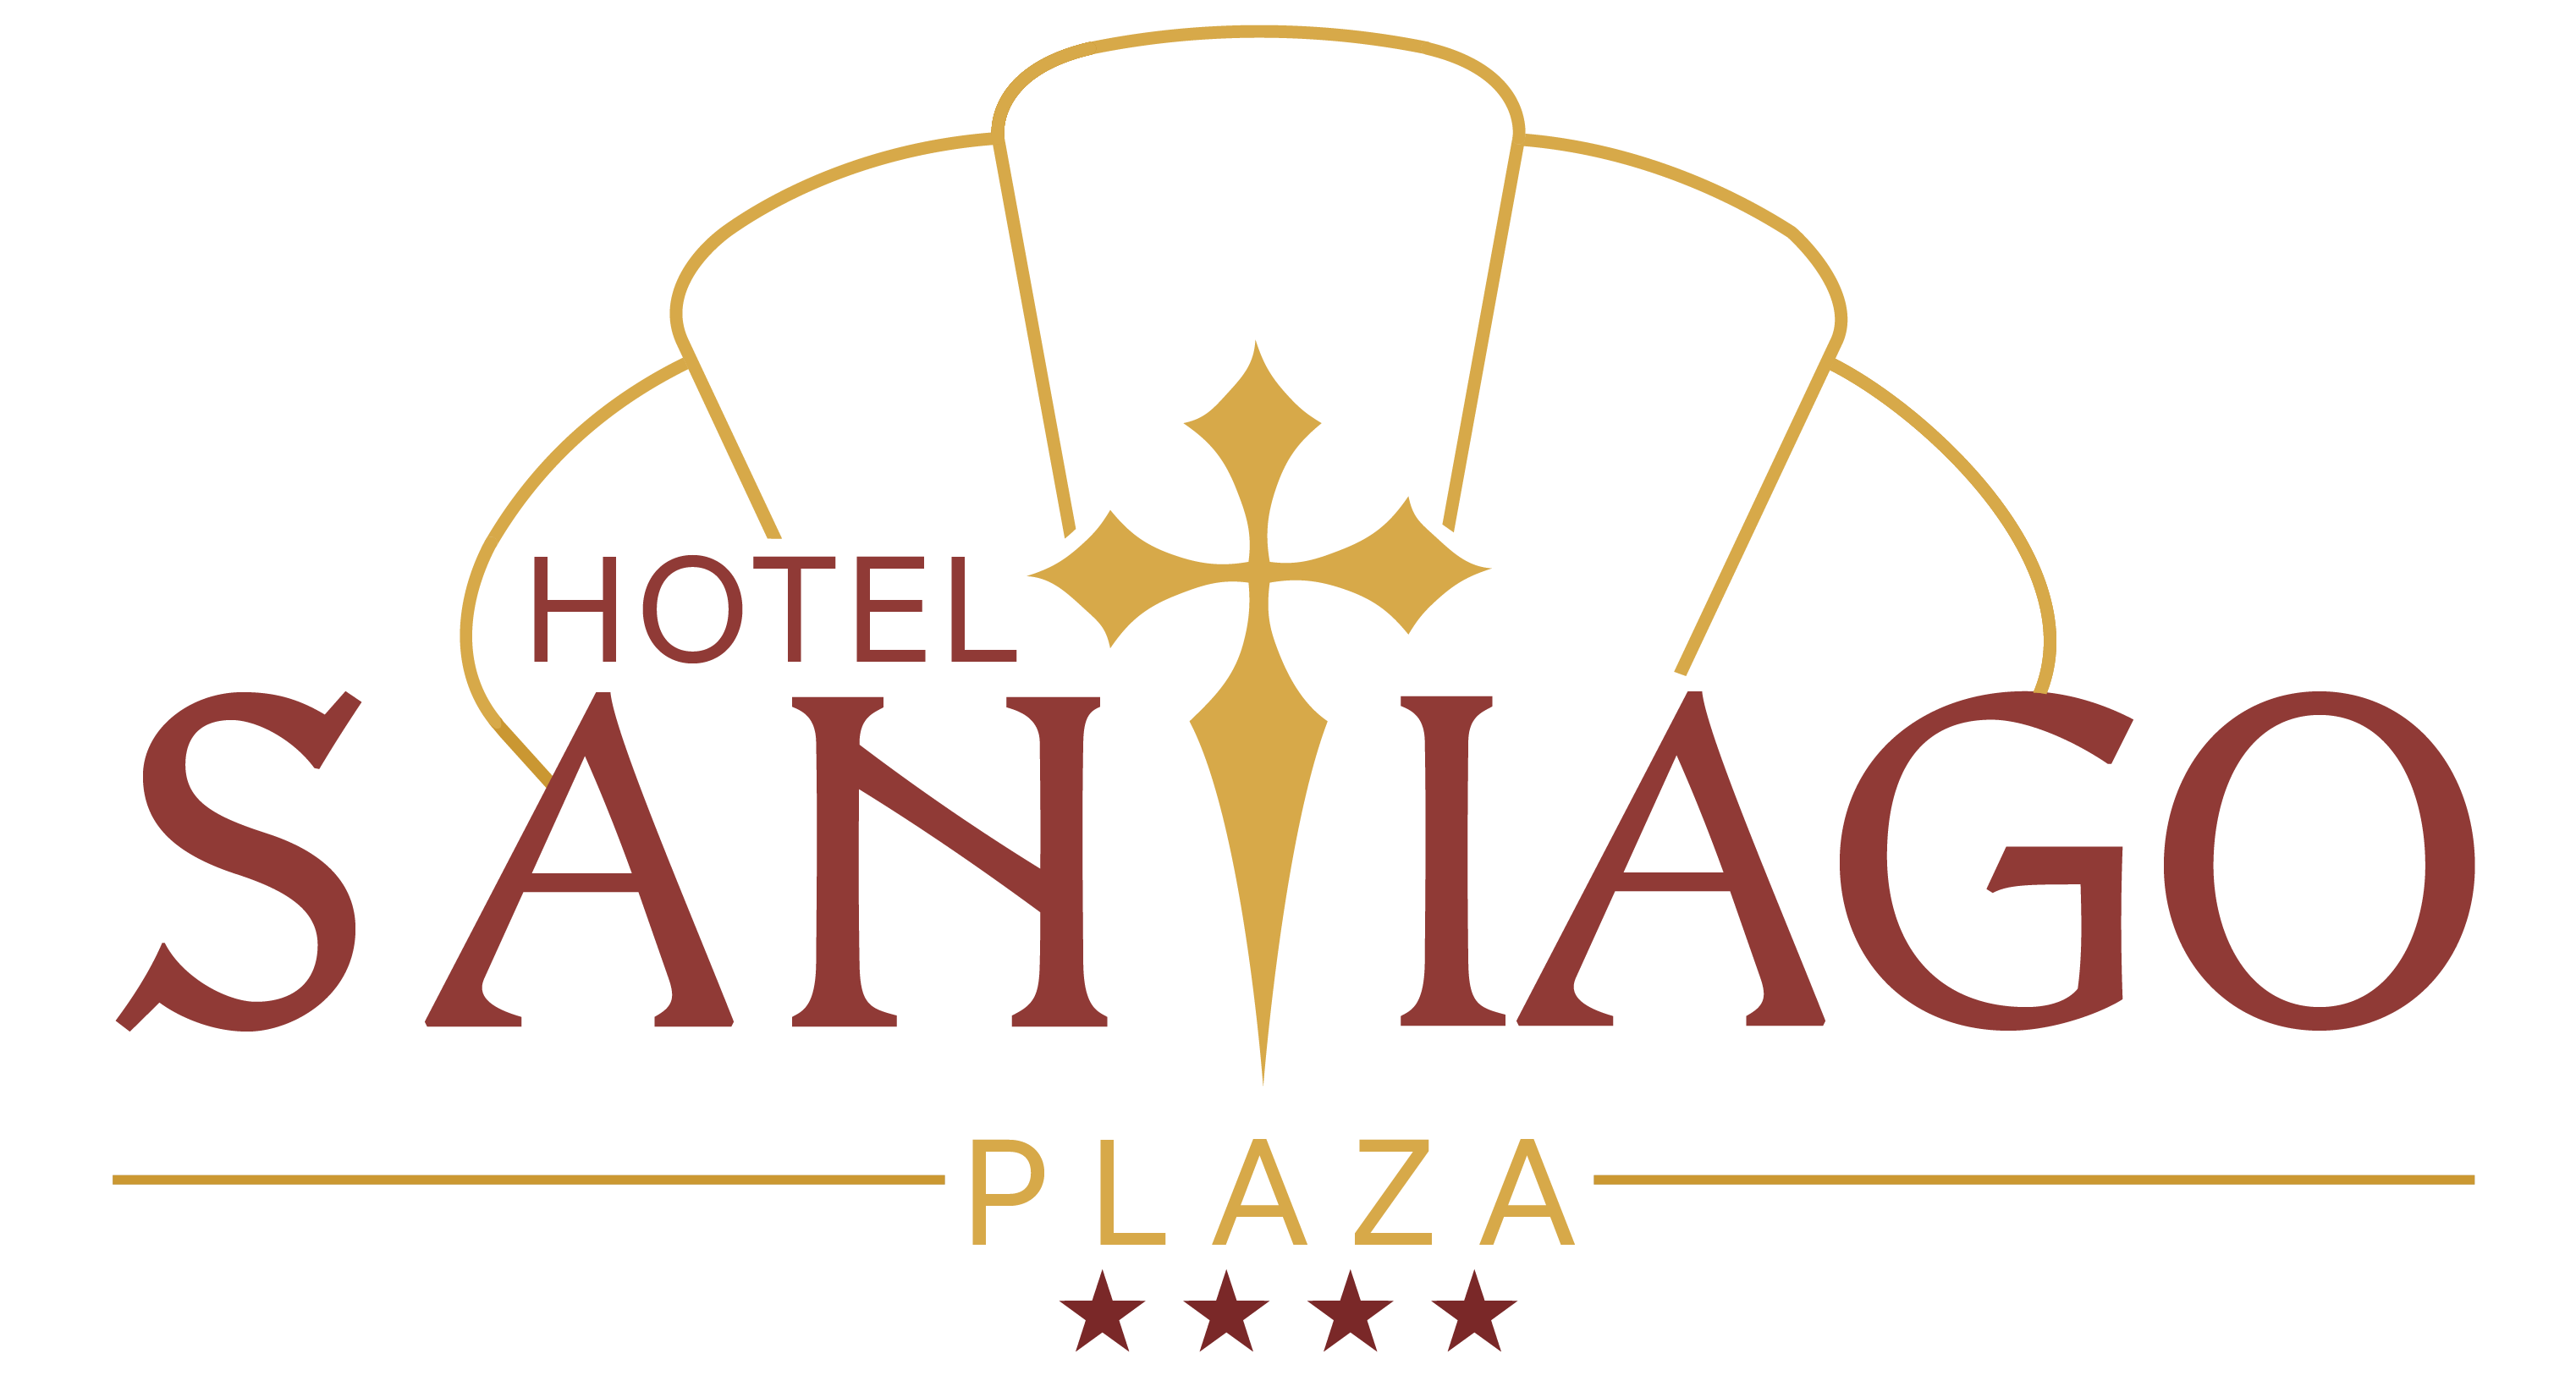 BUFFET - Hotel Santiago Plaza